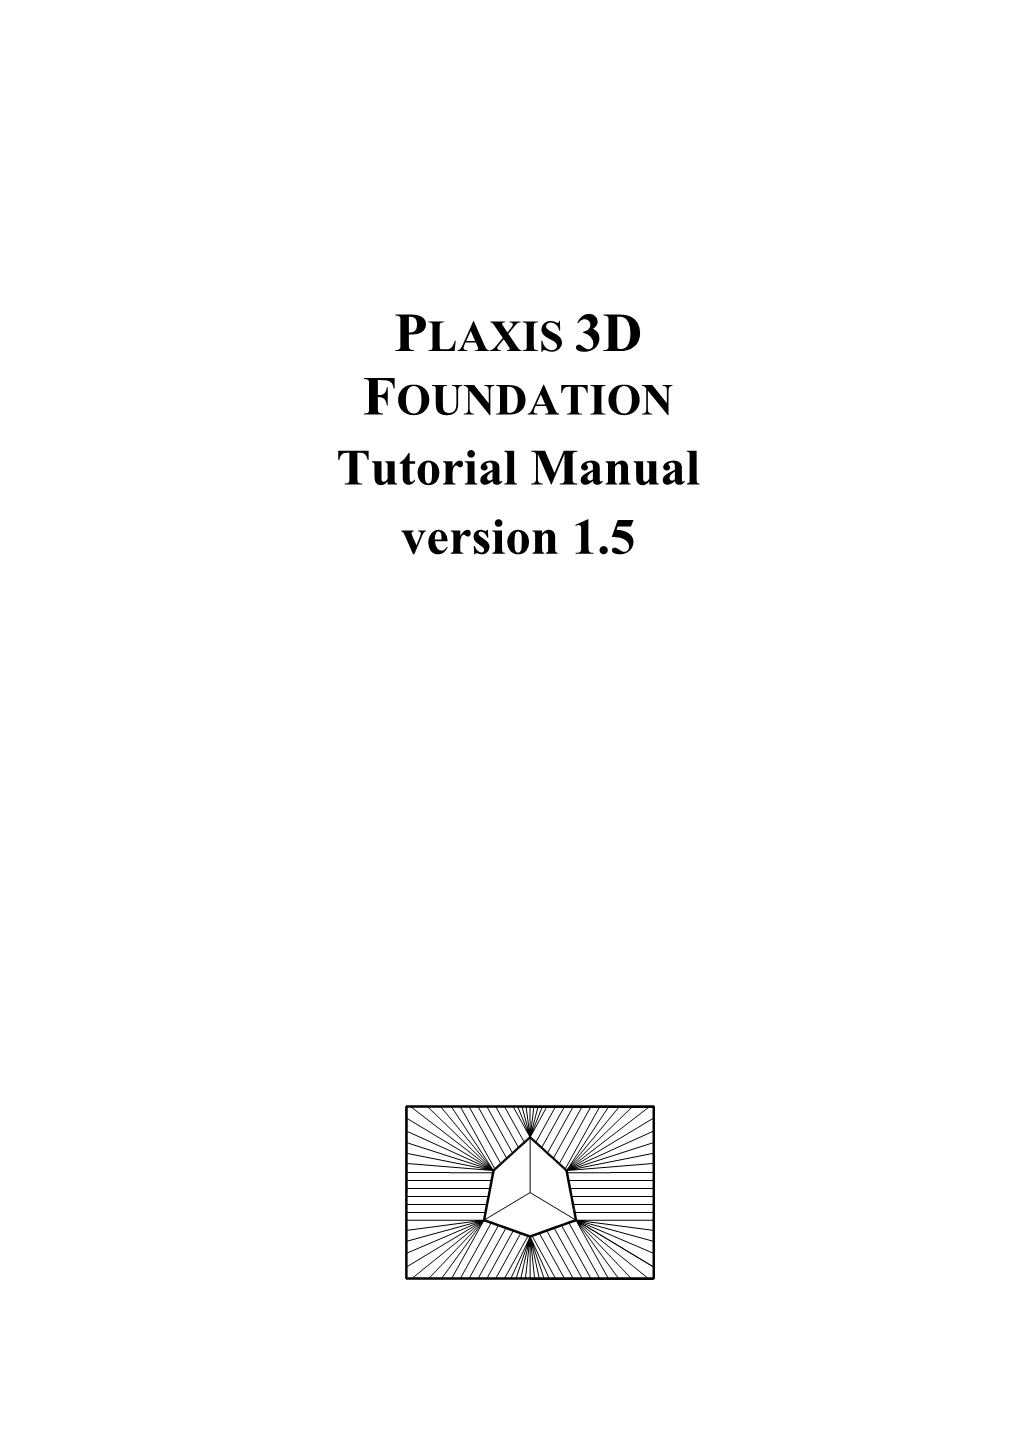 PLAXIS 3D FOUNDATION Tutorial Manual Version 1.5